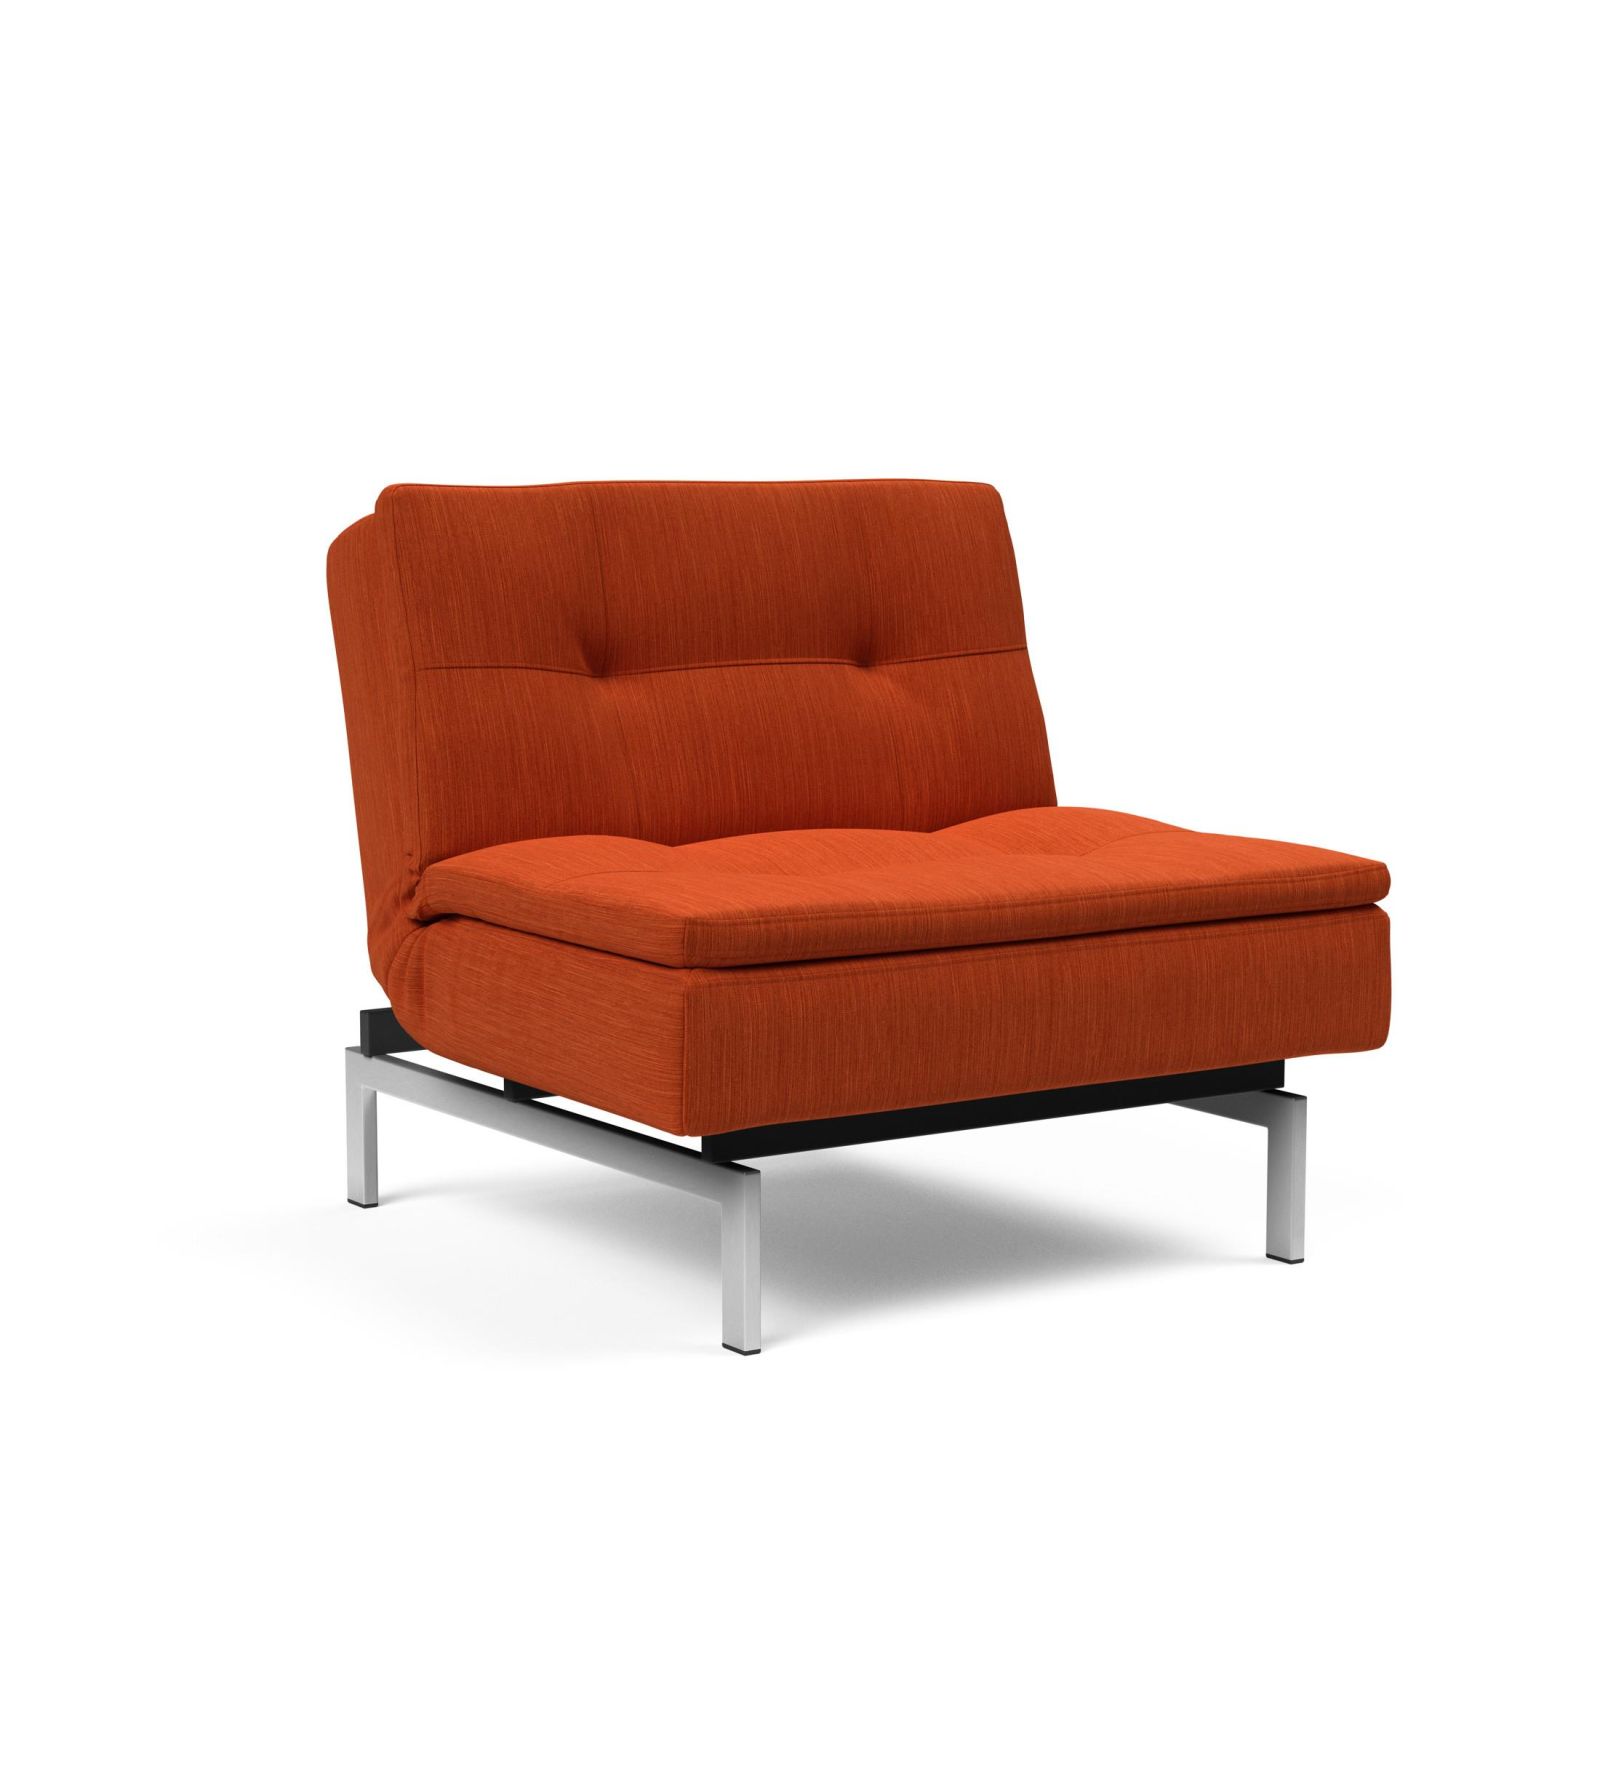 Dublexo Deluxe Stainless Steel Chair by Innovation Living | Modern ...